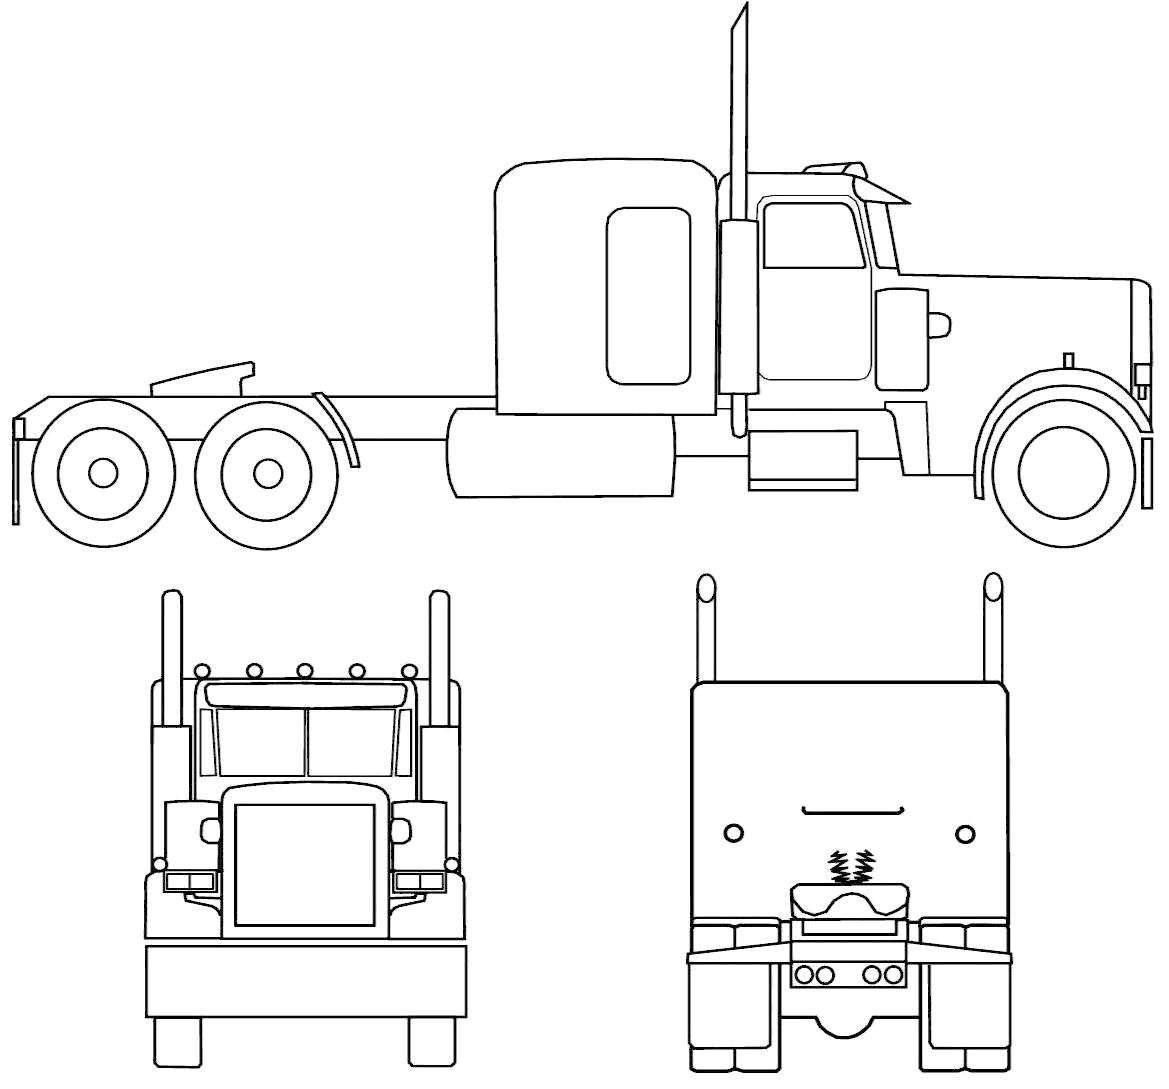 CAR blueprints - 1967 Peterbilt 359 Truck blueprint